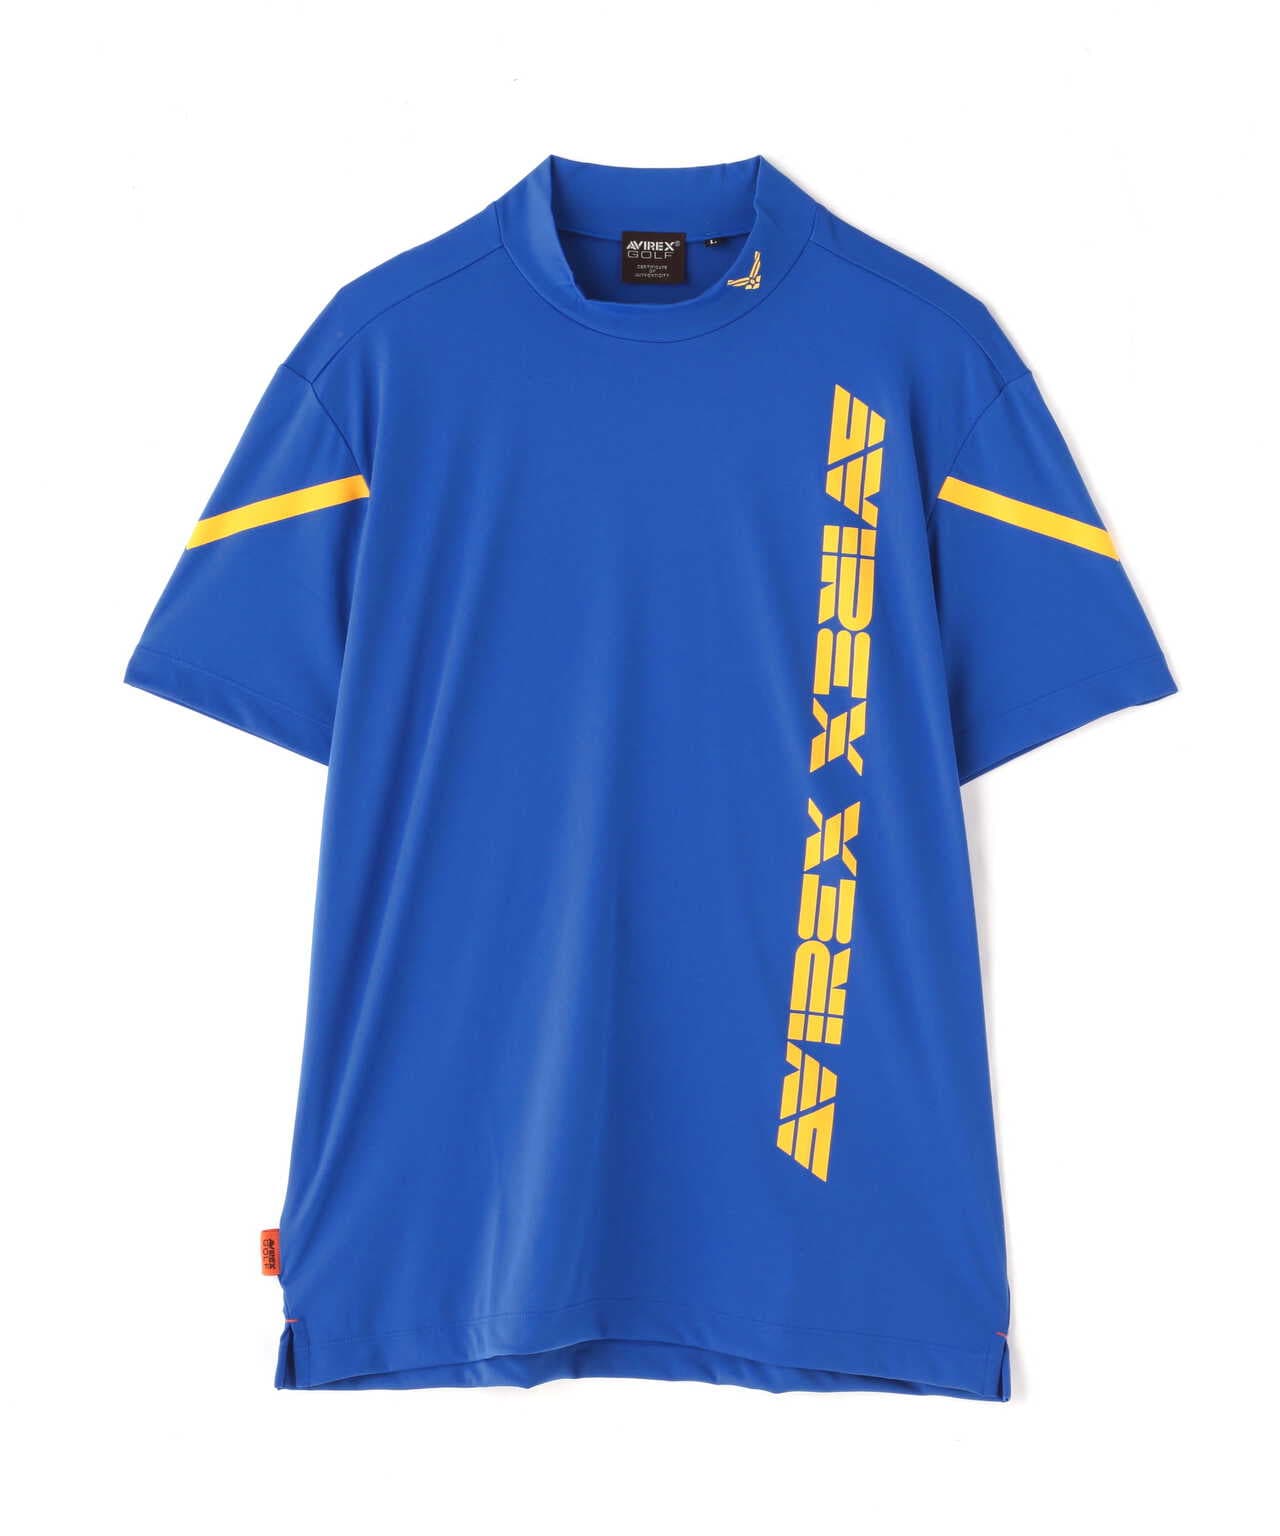 GOLF WEAR》PTU ロゴ モックネック Tシャツ / アヴィレックス /AVIREX